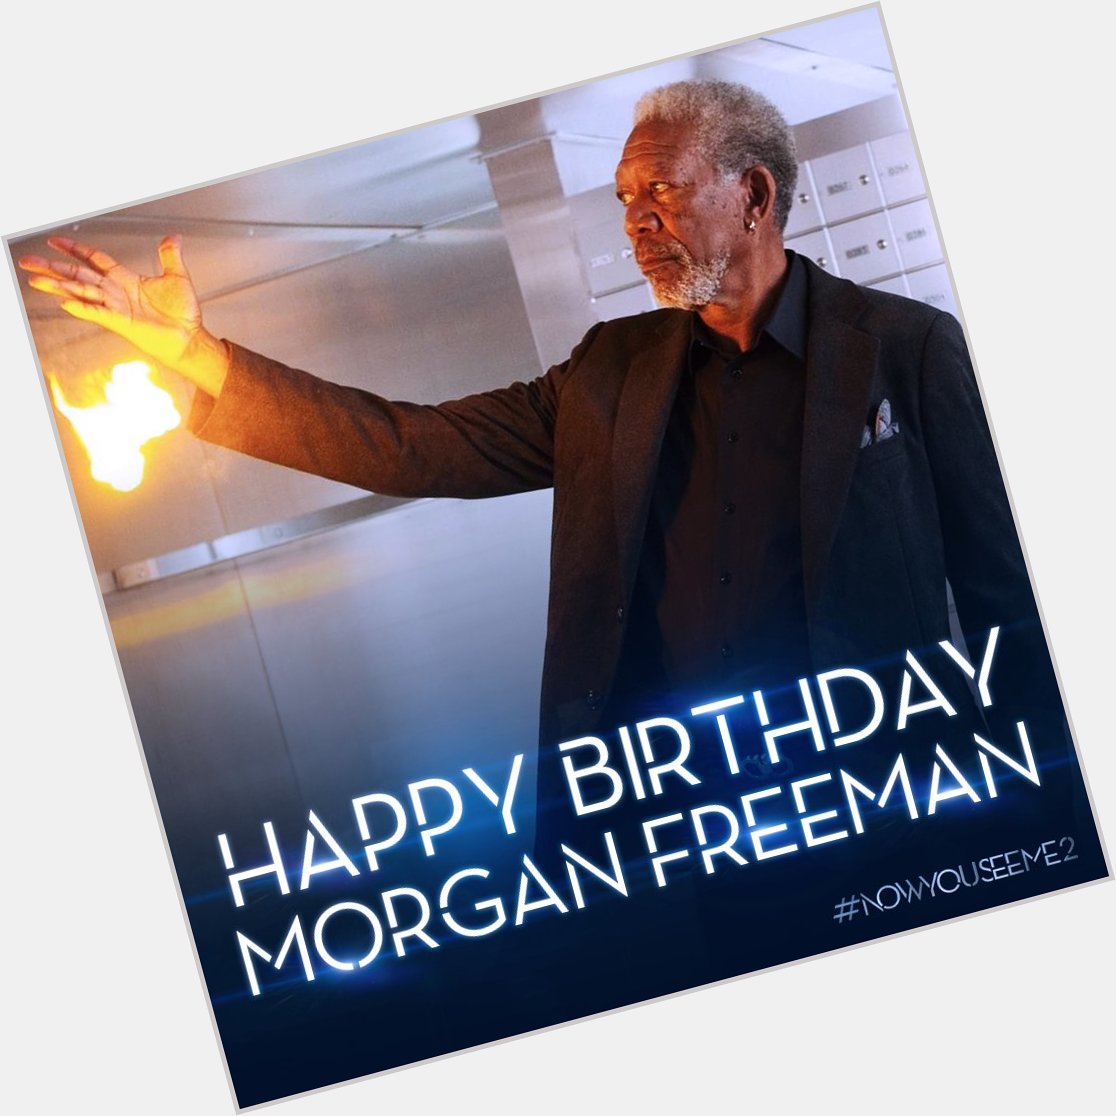 Wish the legendary Morgan Freeman a Happy Birthday! 